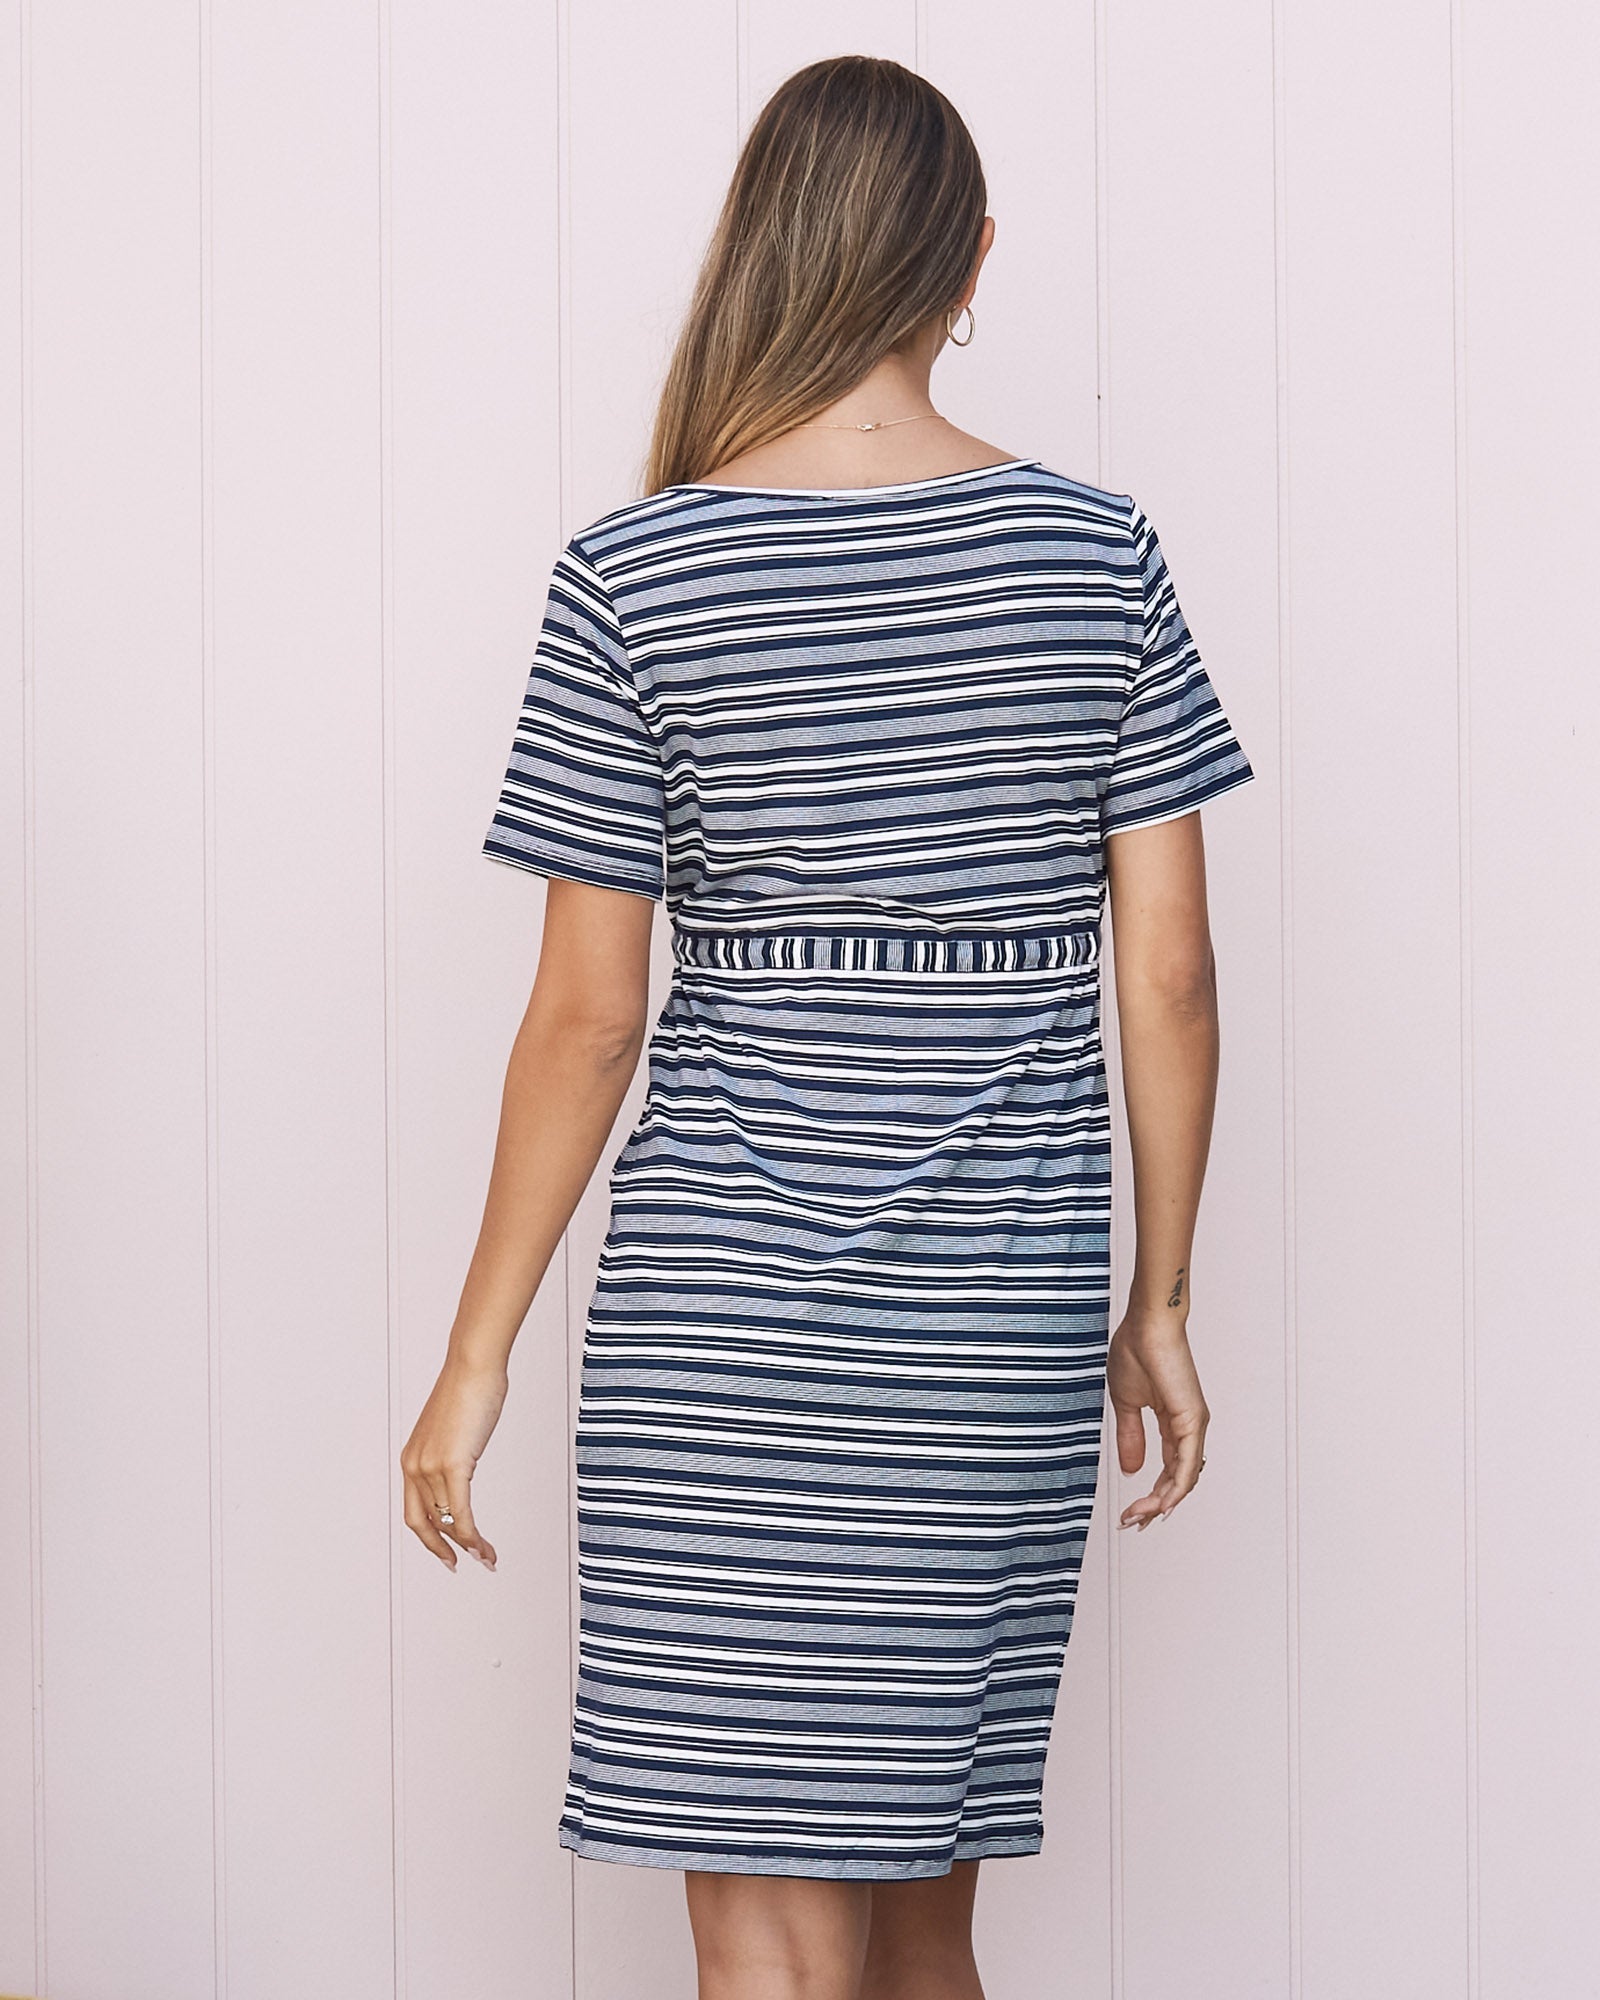 Erika Maternity Short Sleeve Drawstring Dress - Navy & White Stripes